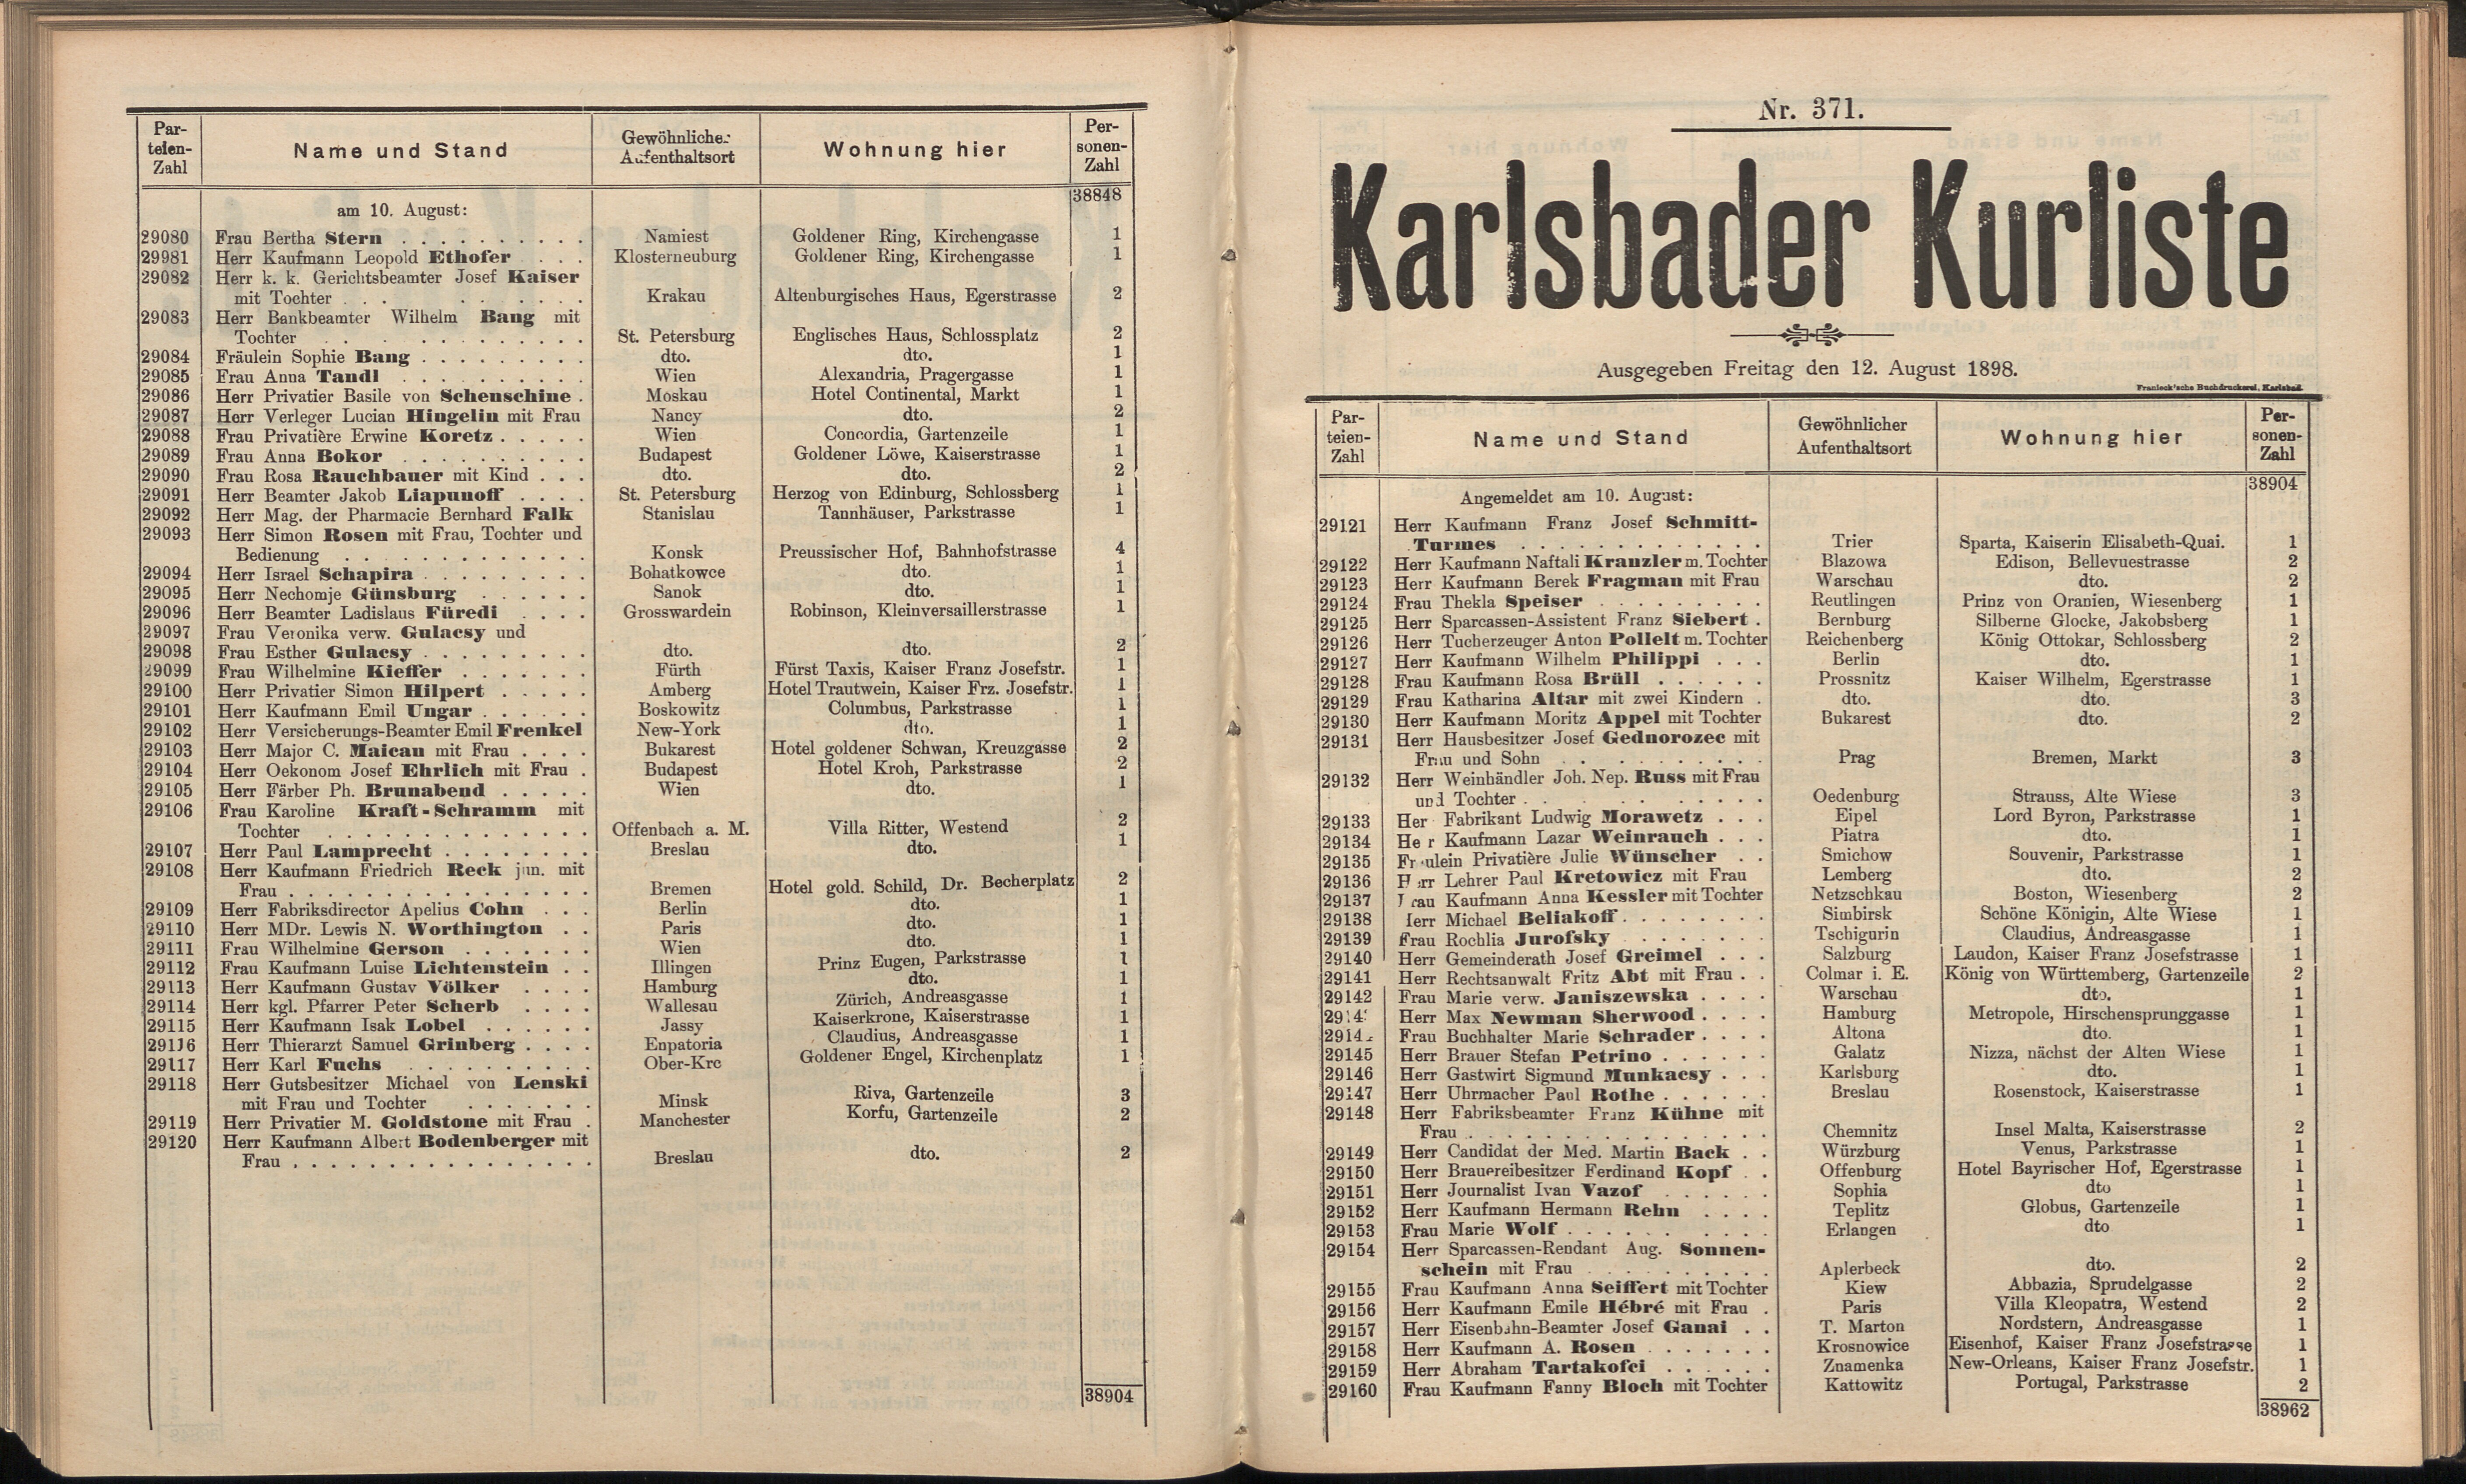 387. soap-kv_knihovna_karlsbader-kurliste-1898_3880